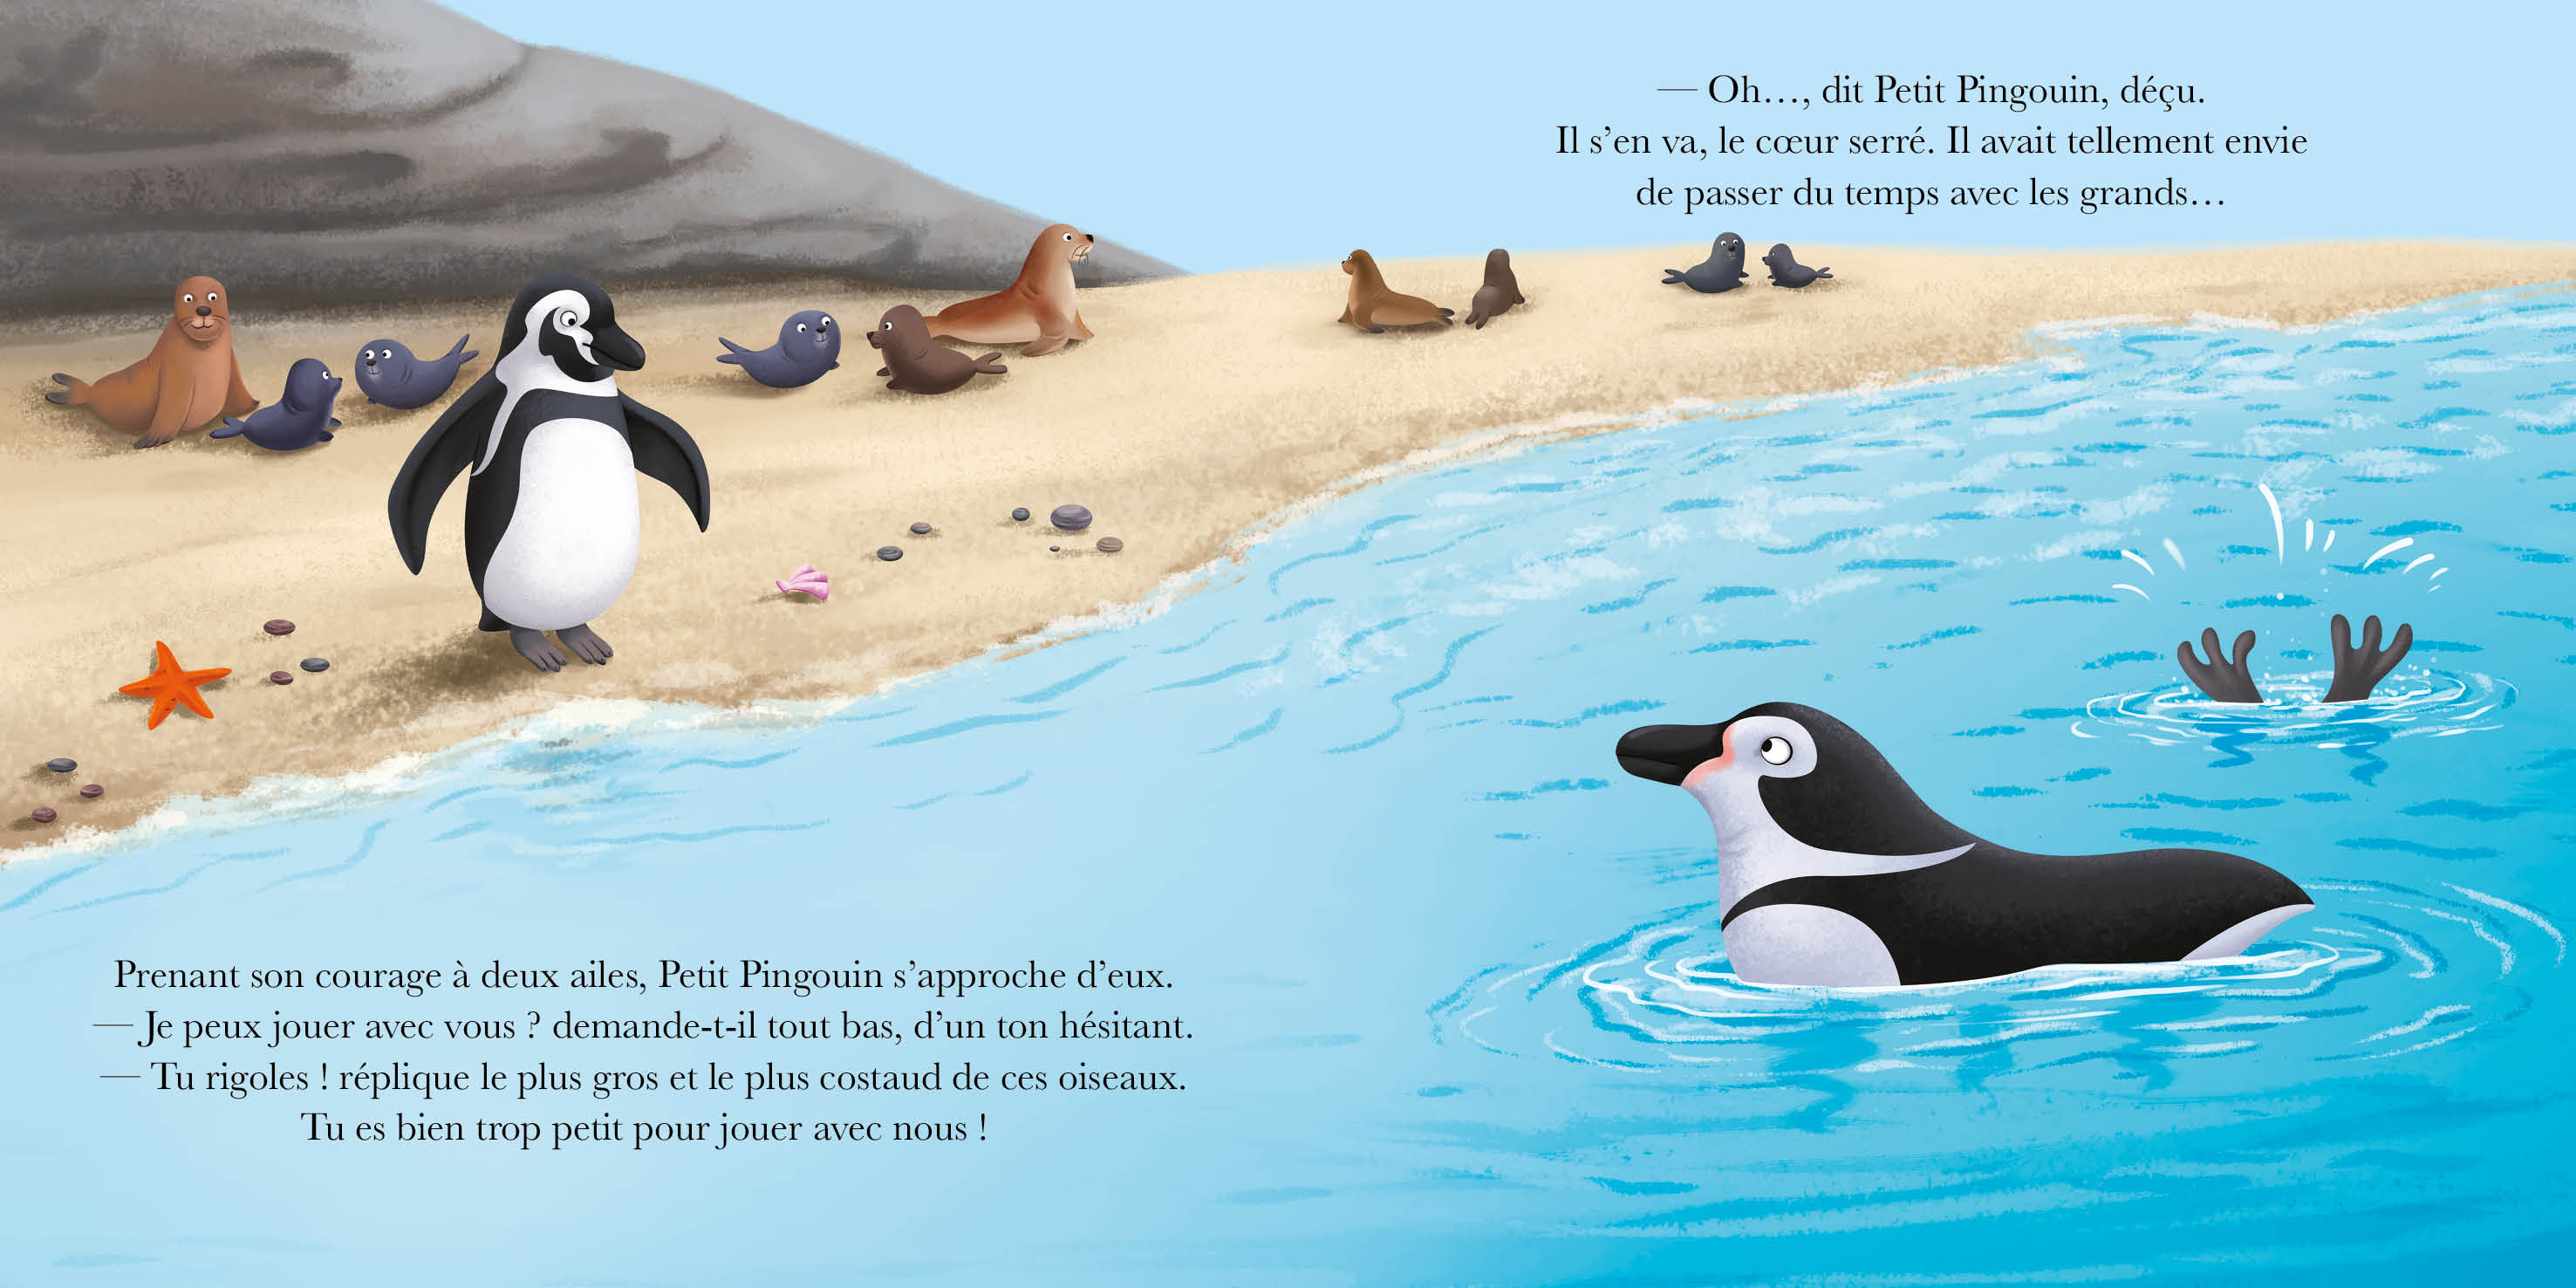 Pingouin N'a Pas D'amis